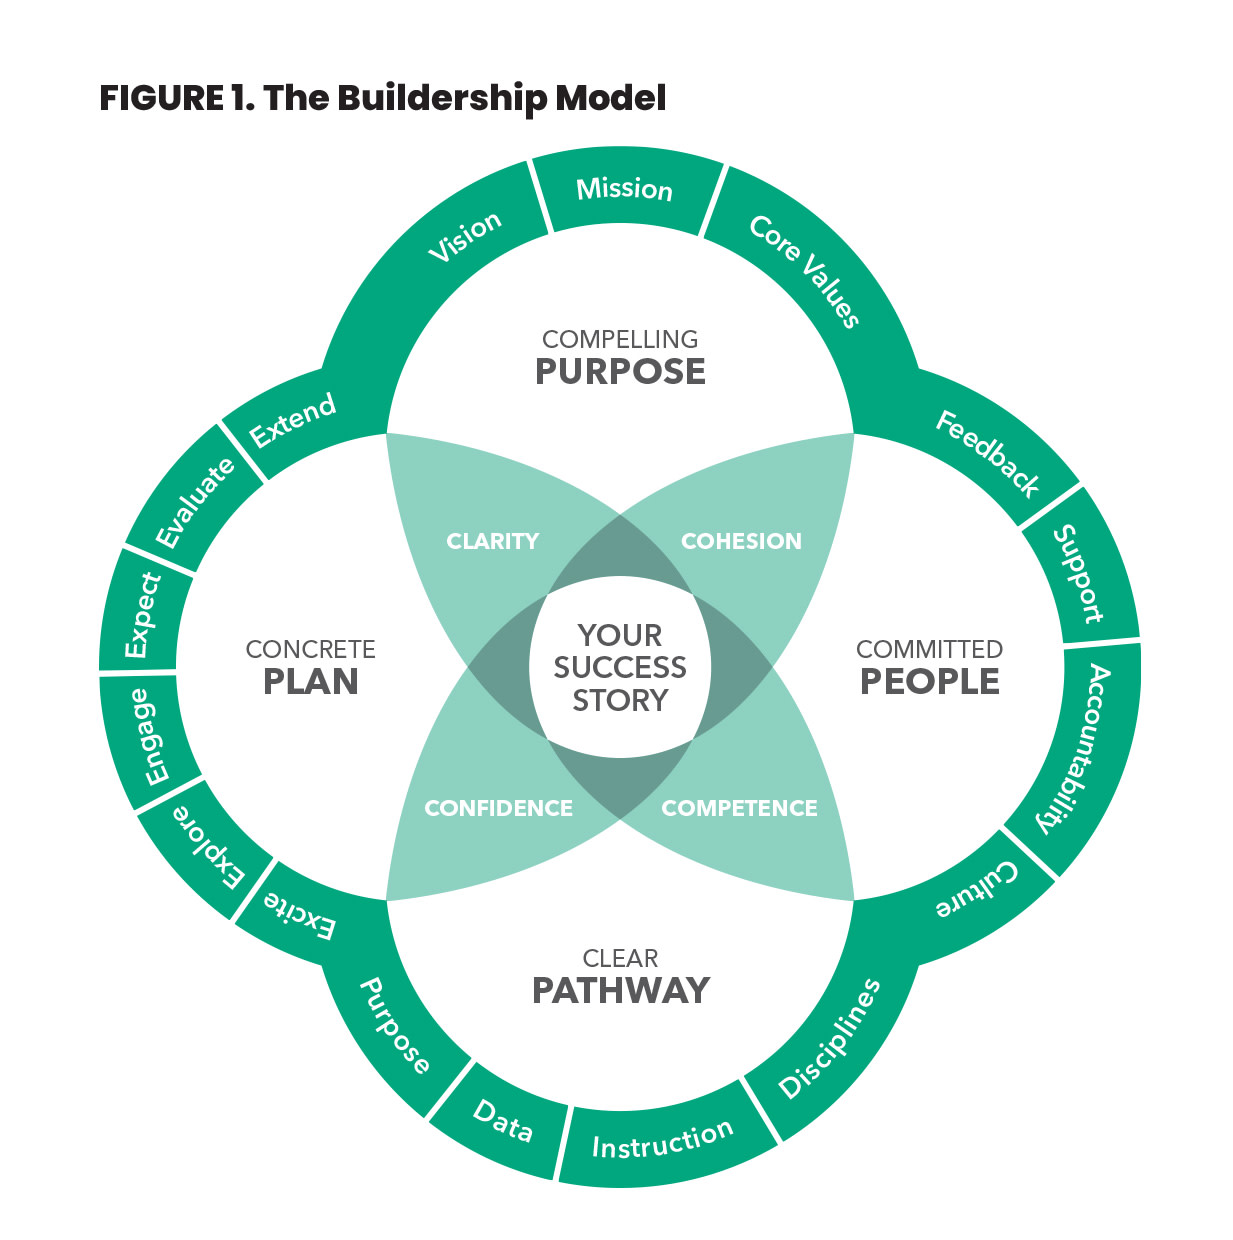 Robyn Jackson's "buildership" model